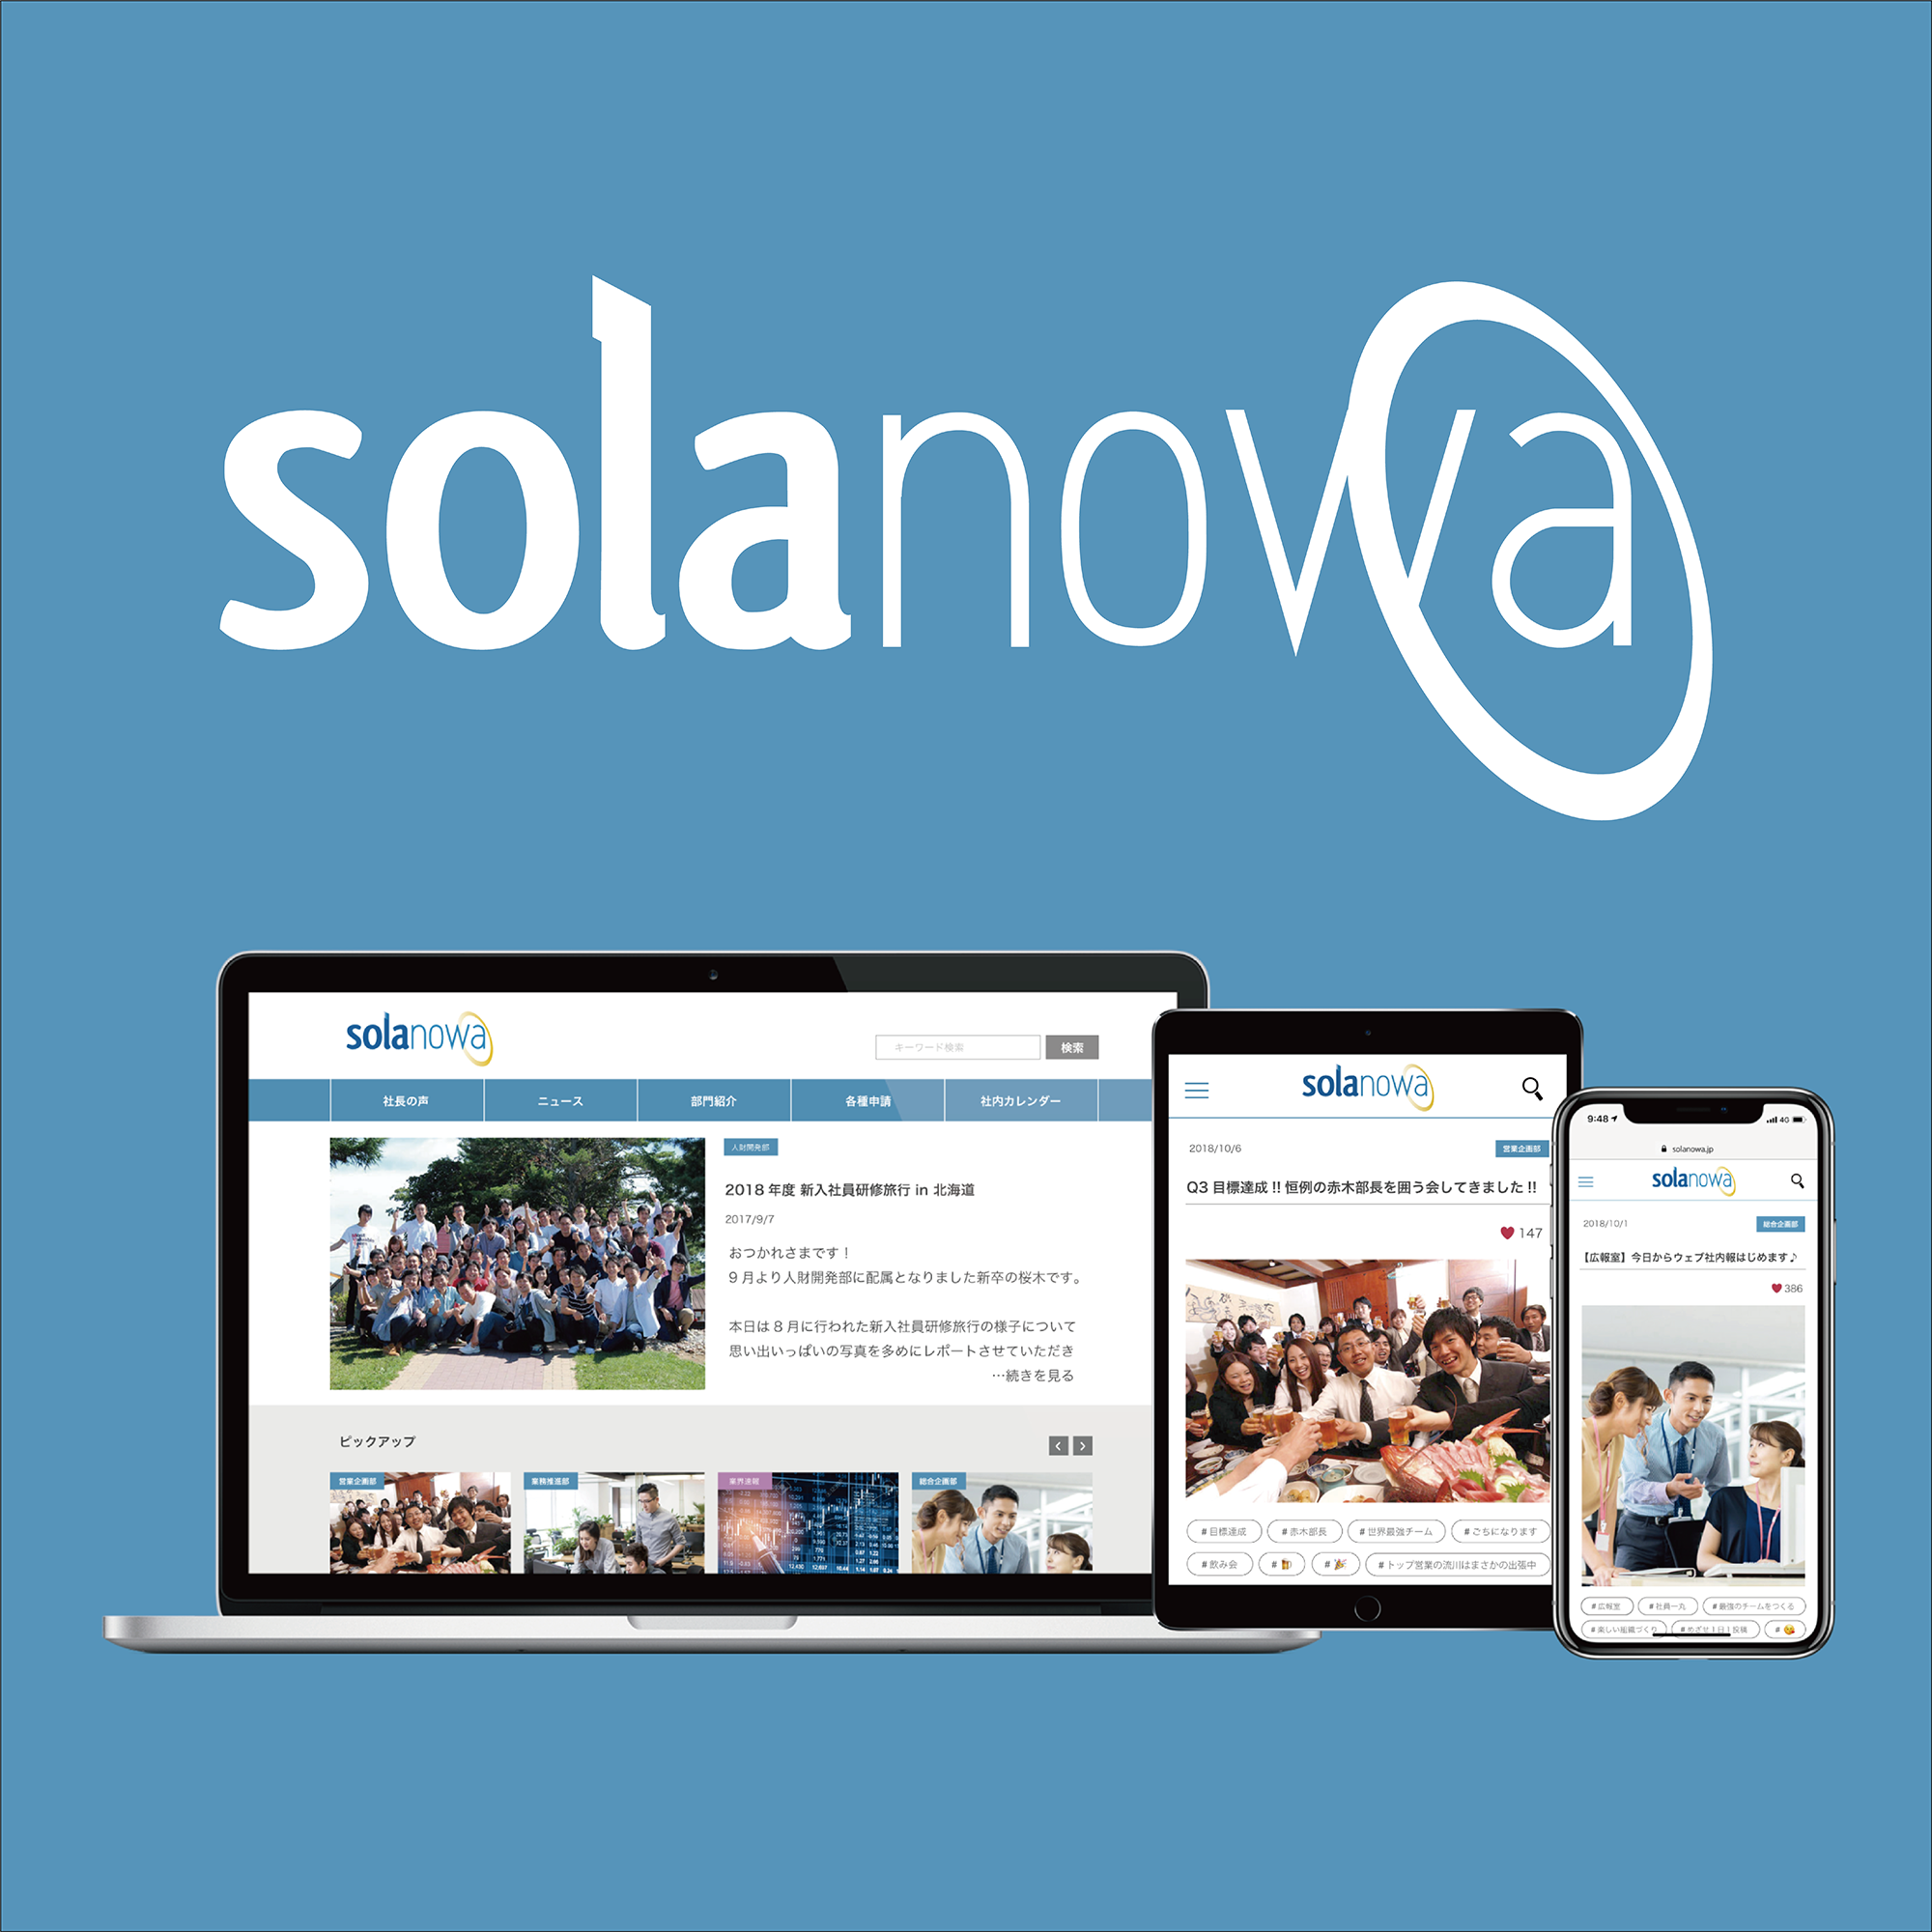 Solanowa_logo_UI.png